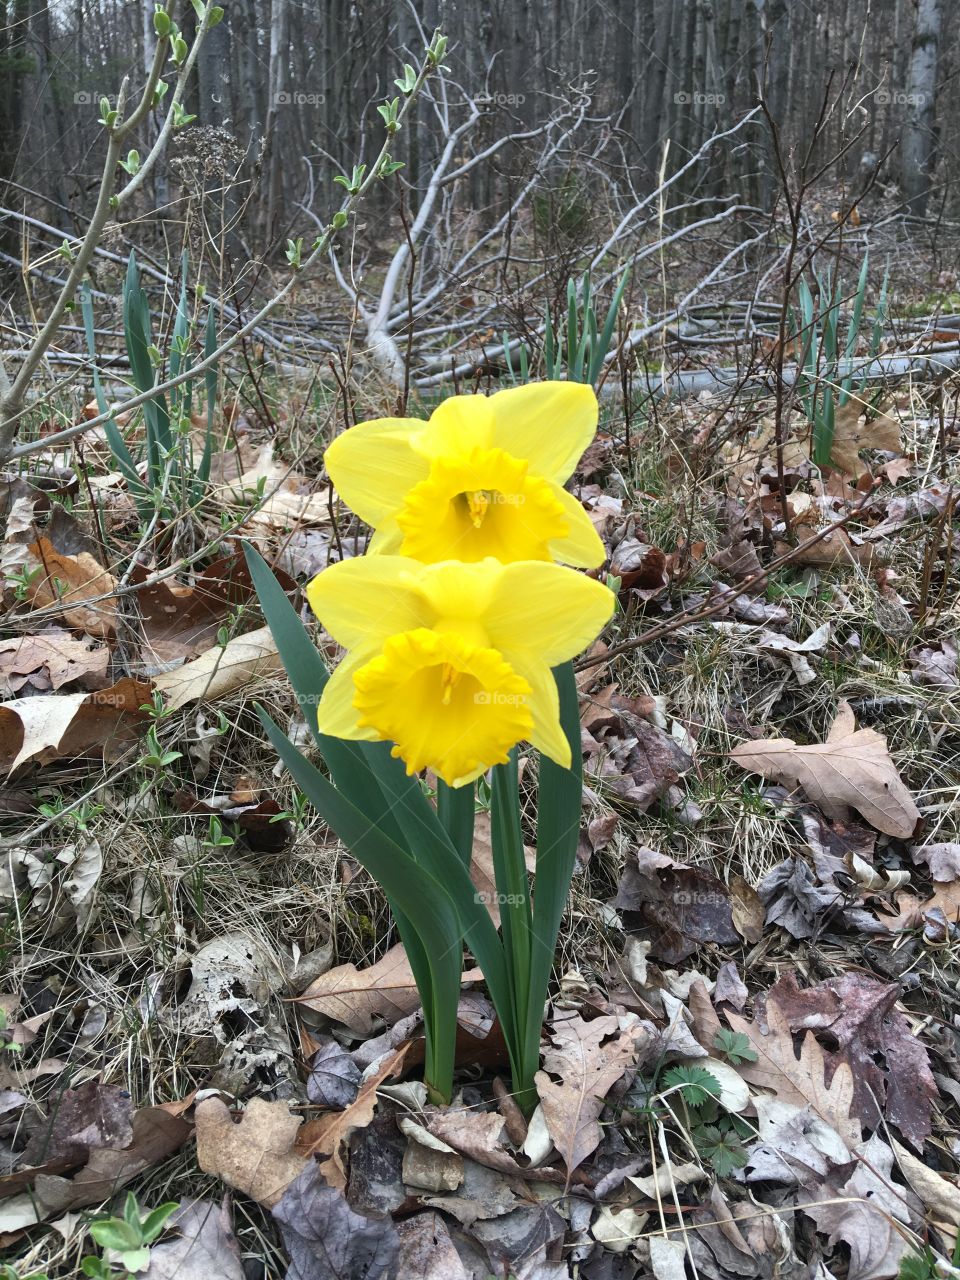 Odessa Rd Daffodils 

